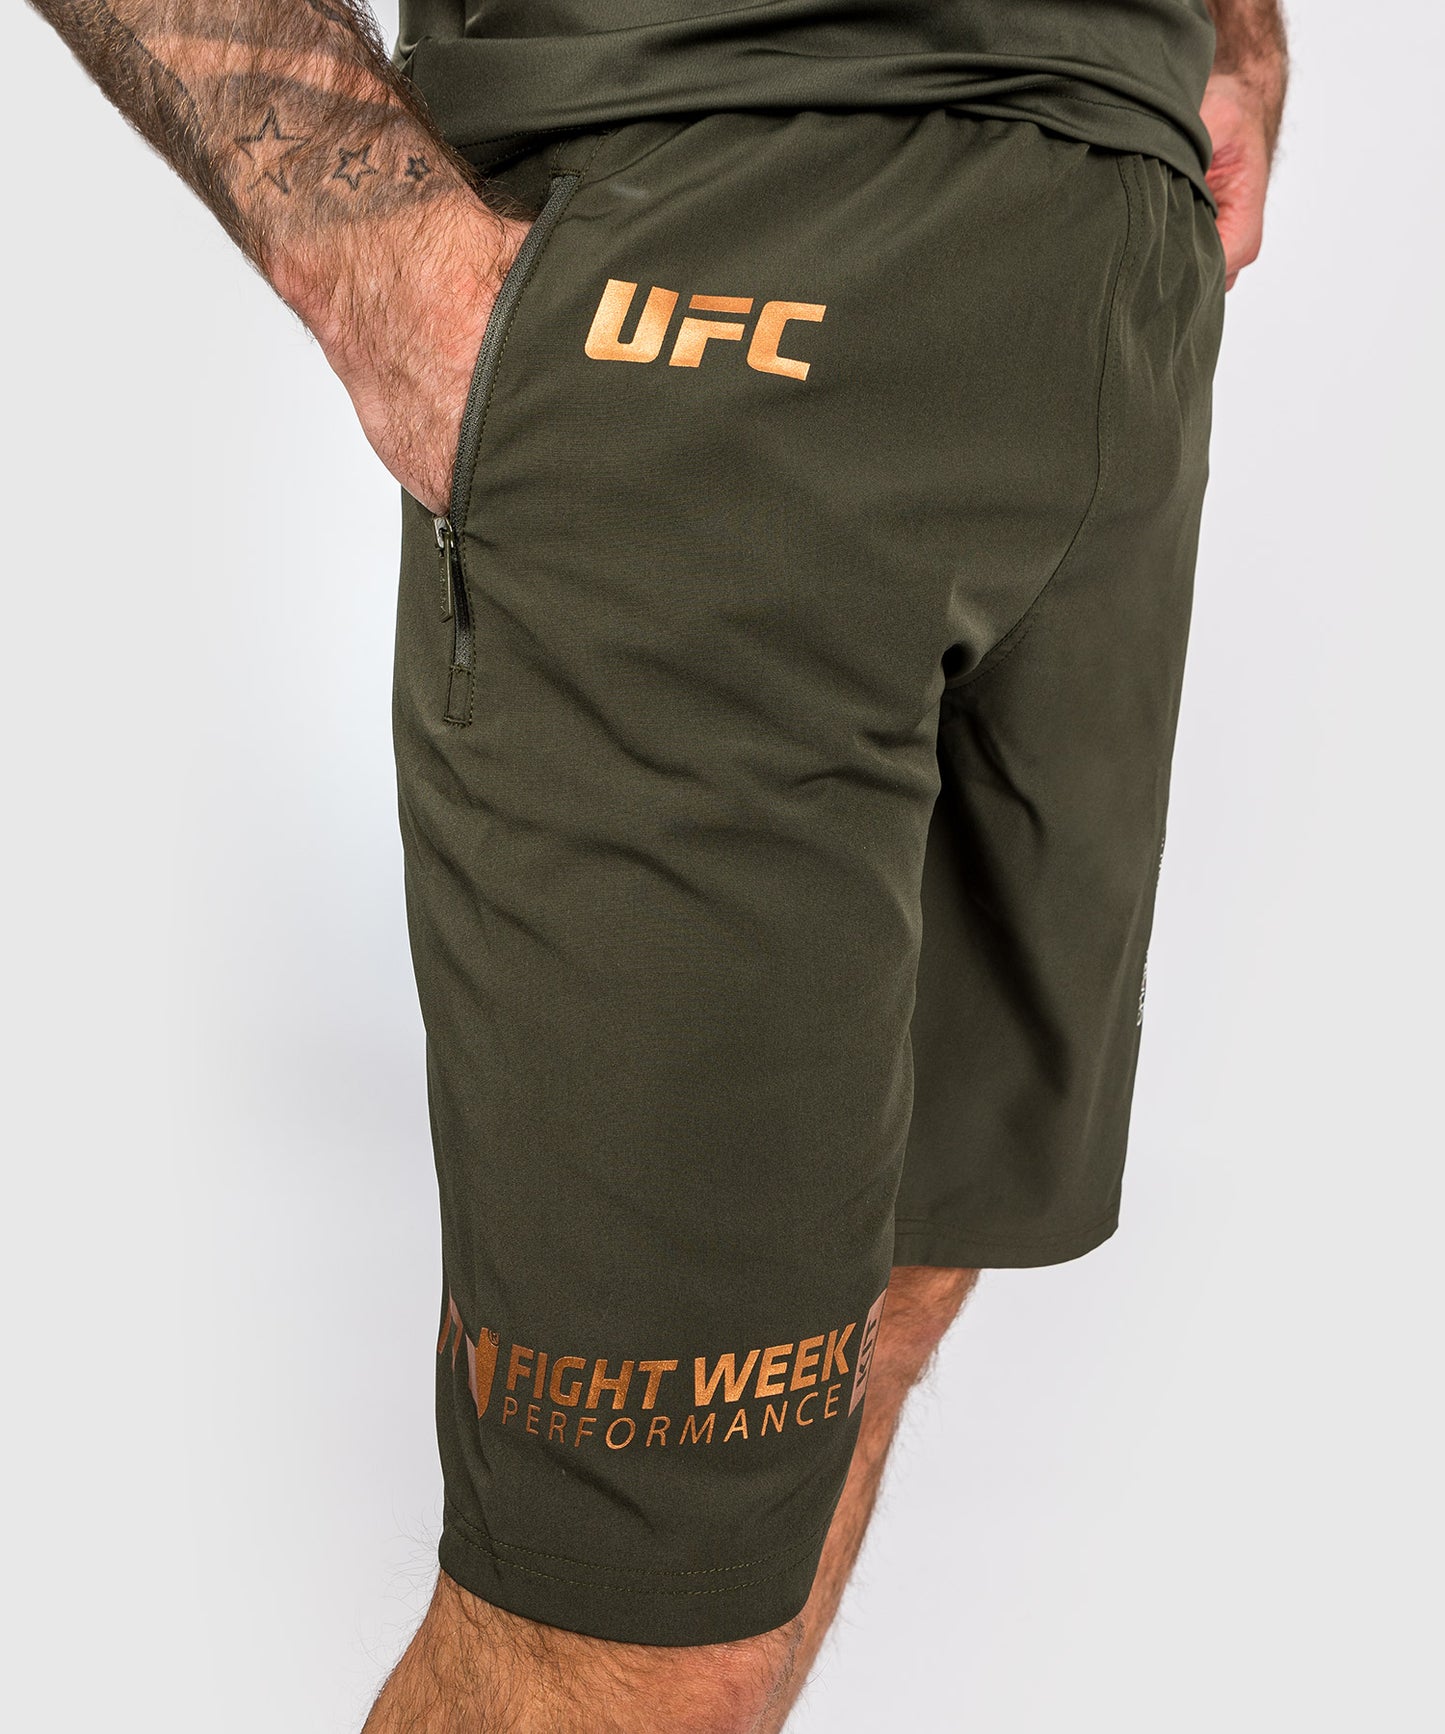 UFC Adrenaline by Venum Fight Week Men’s Performance Shorts - Khaki/Bronze